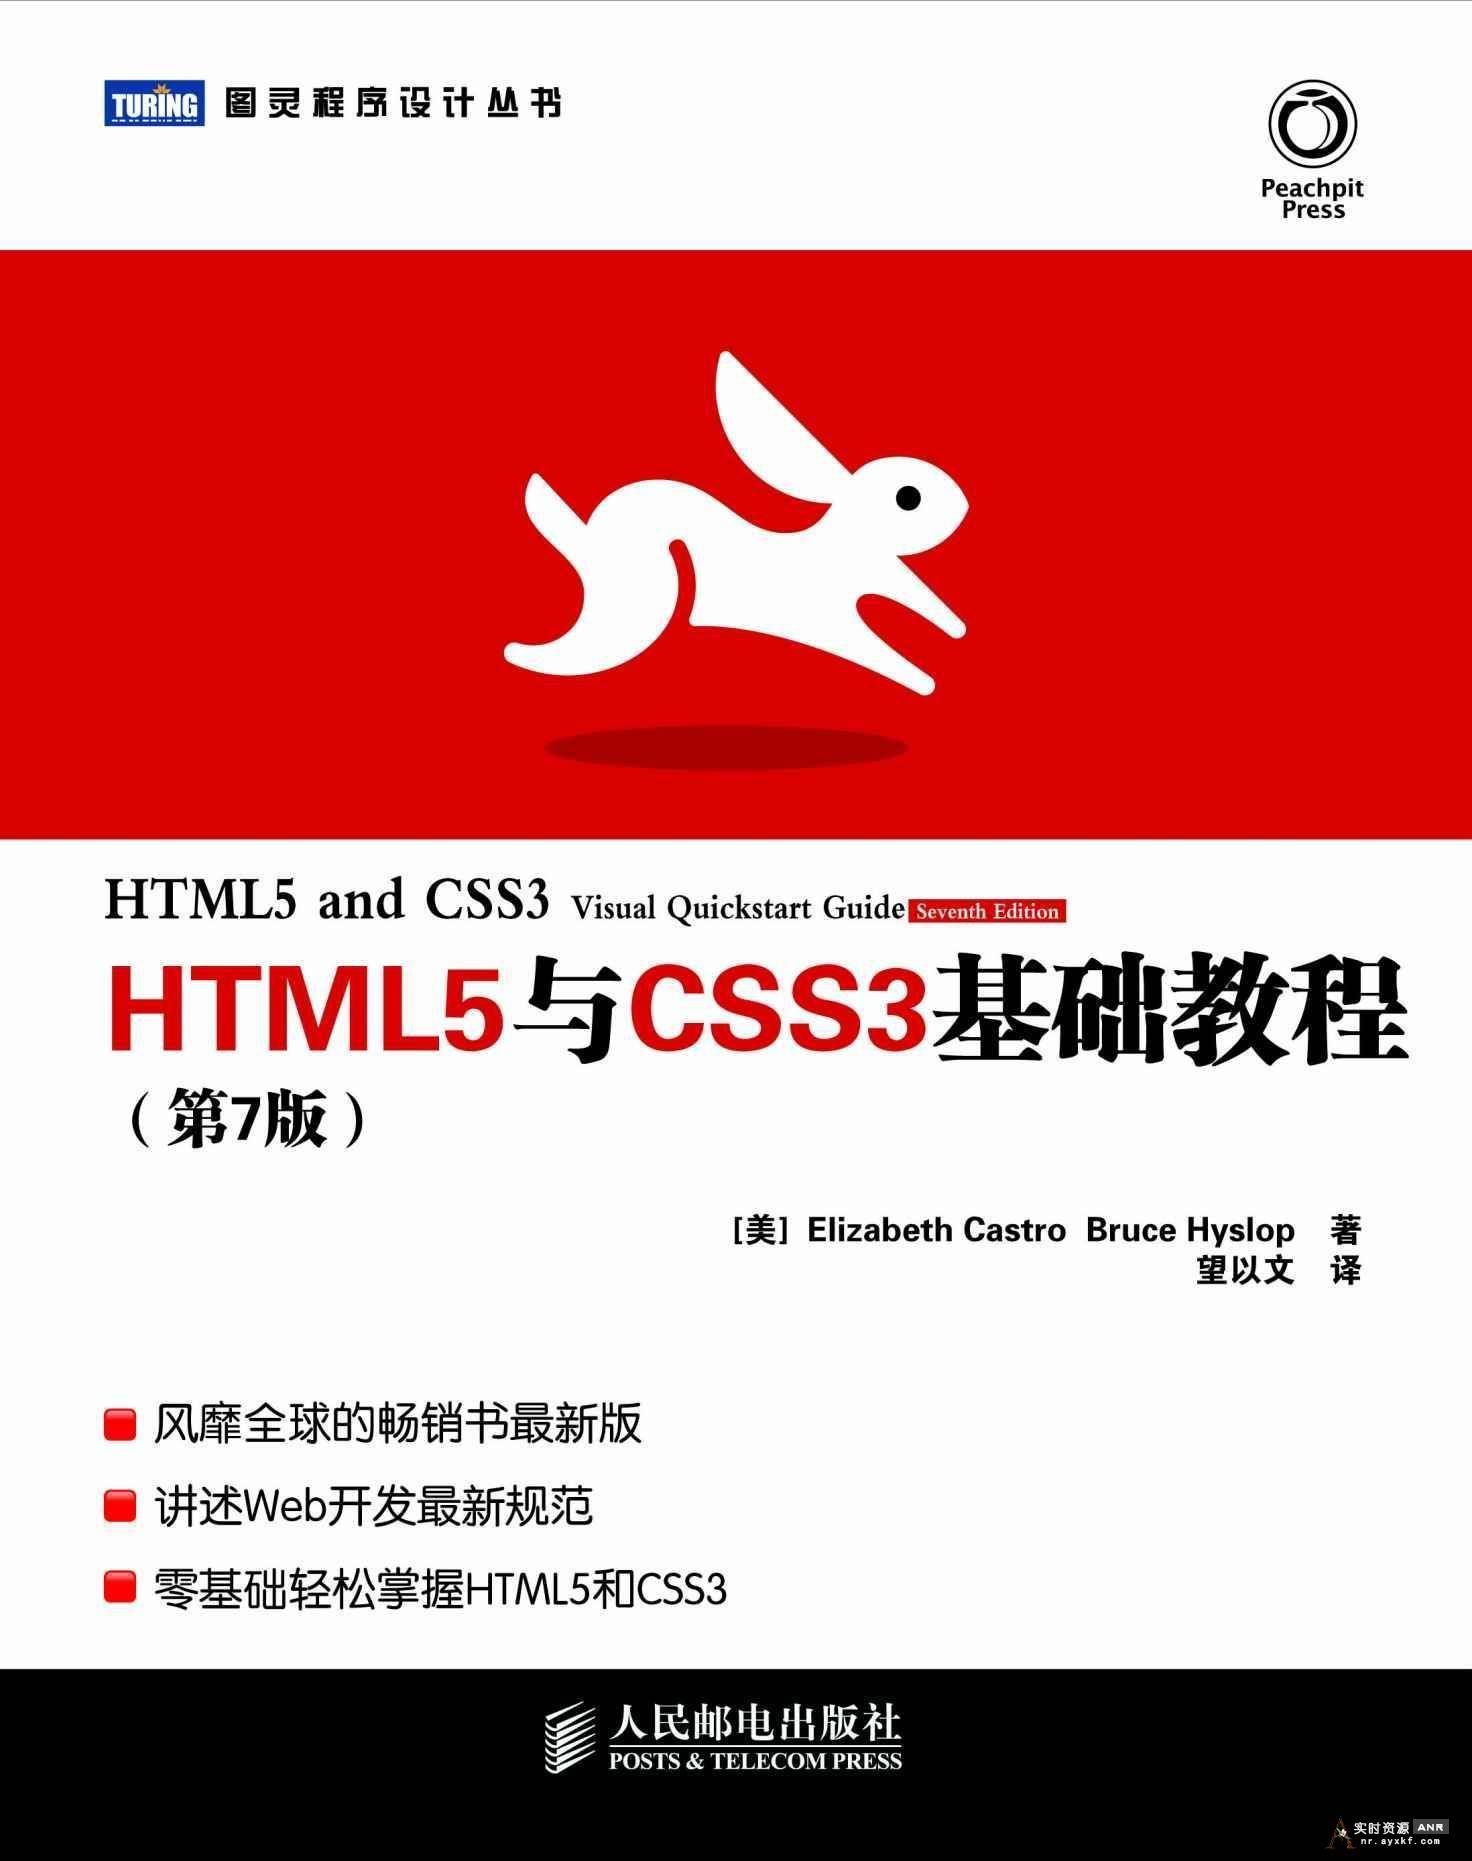 【分享】HTML5与CSS3基础教程